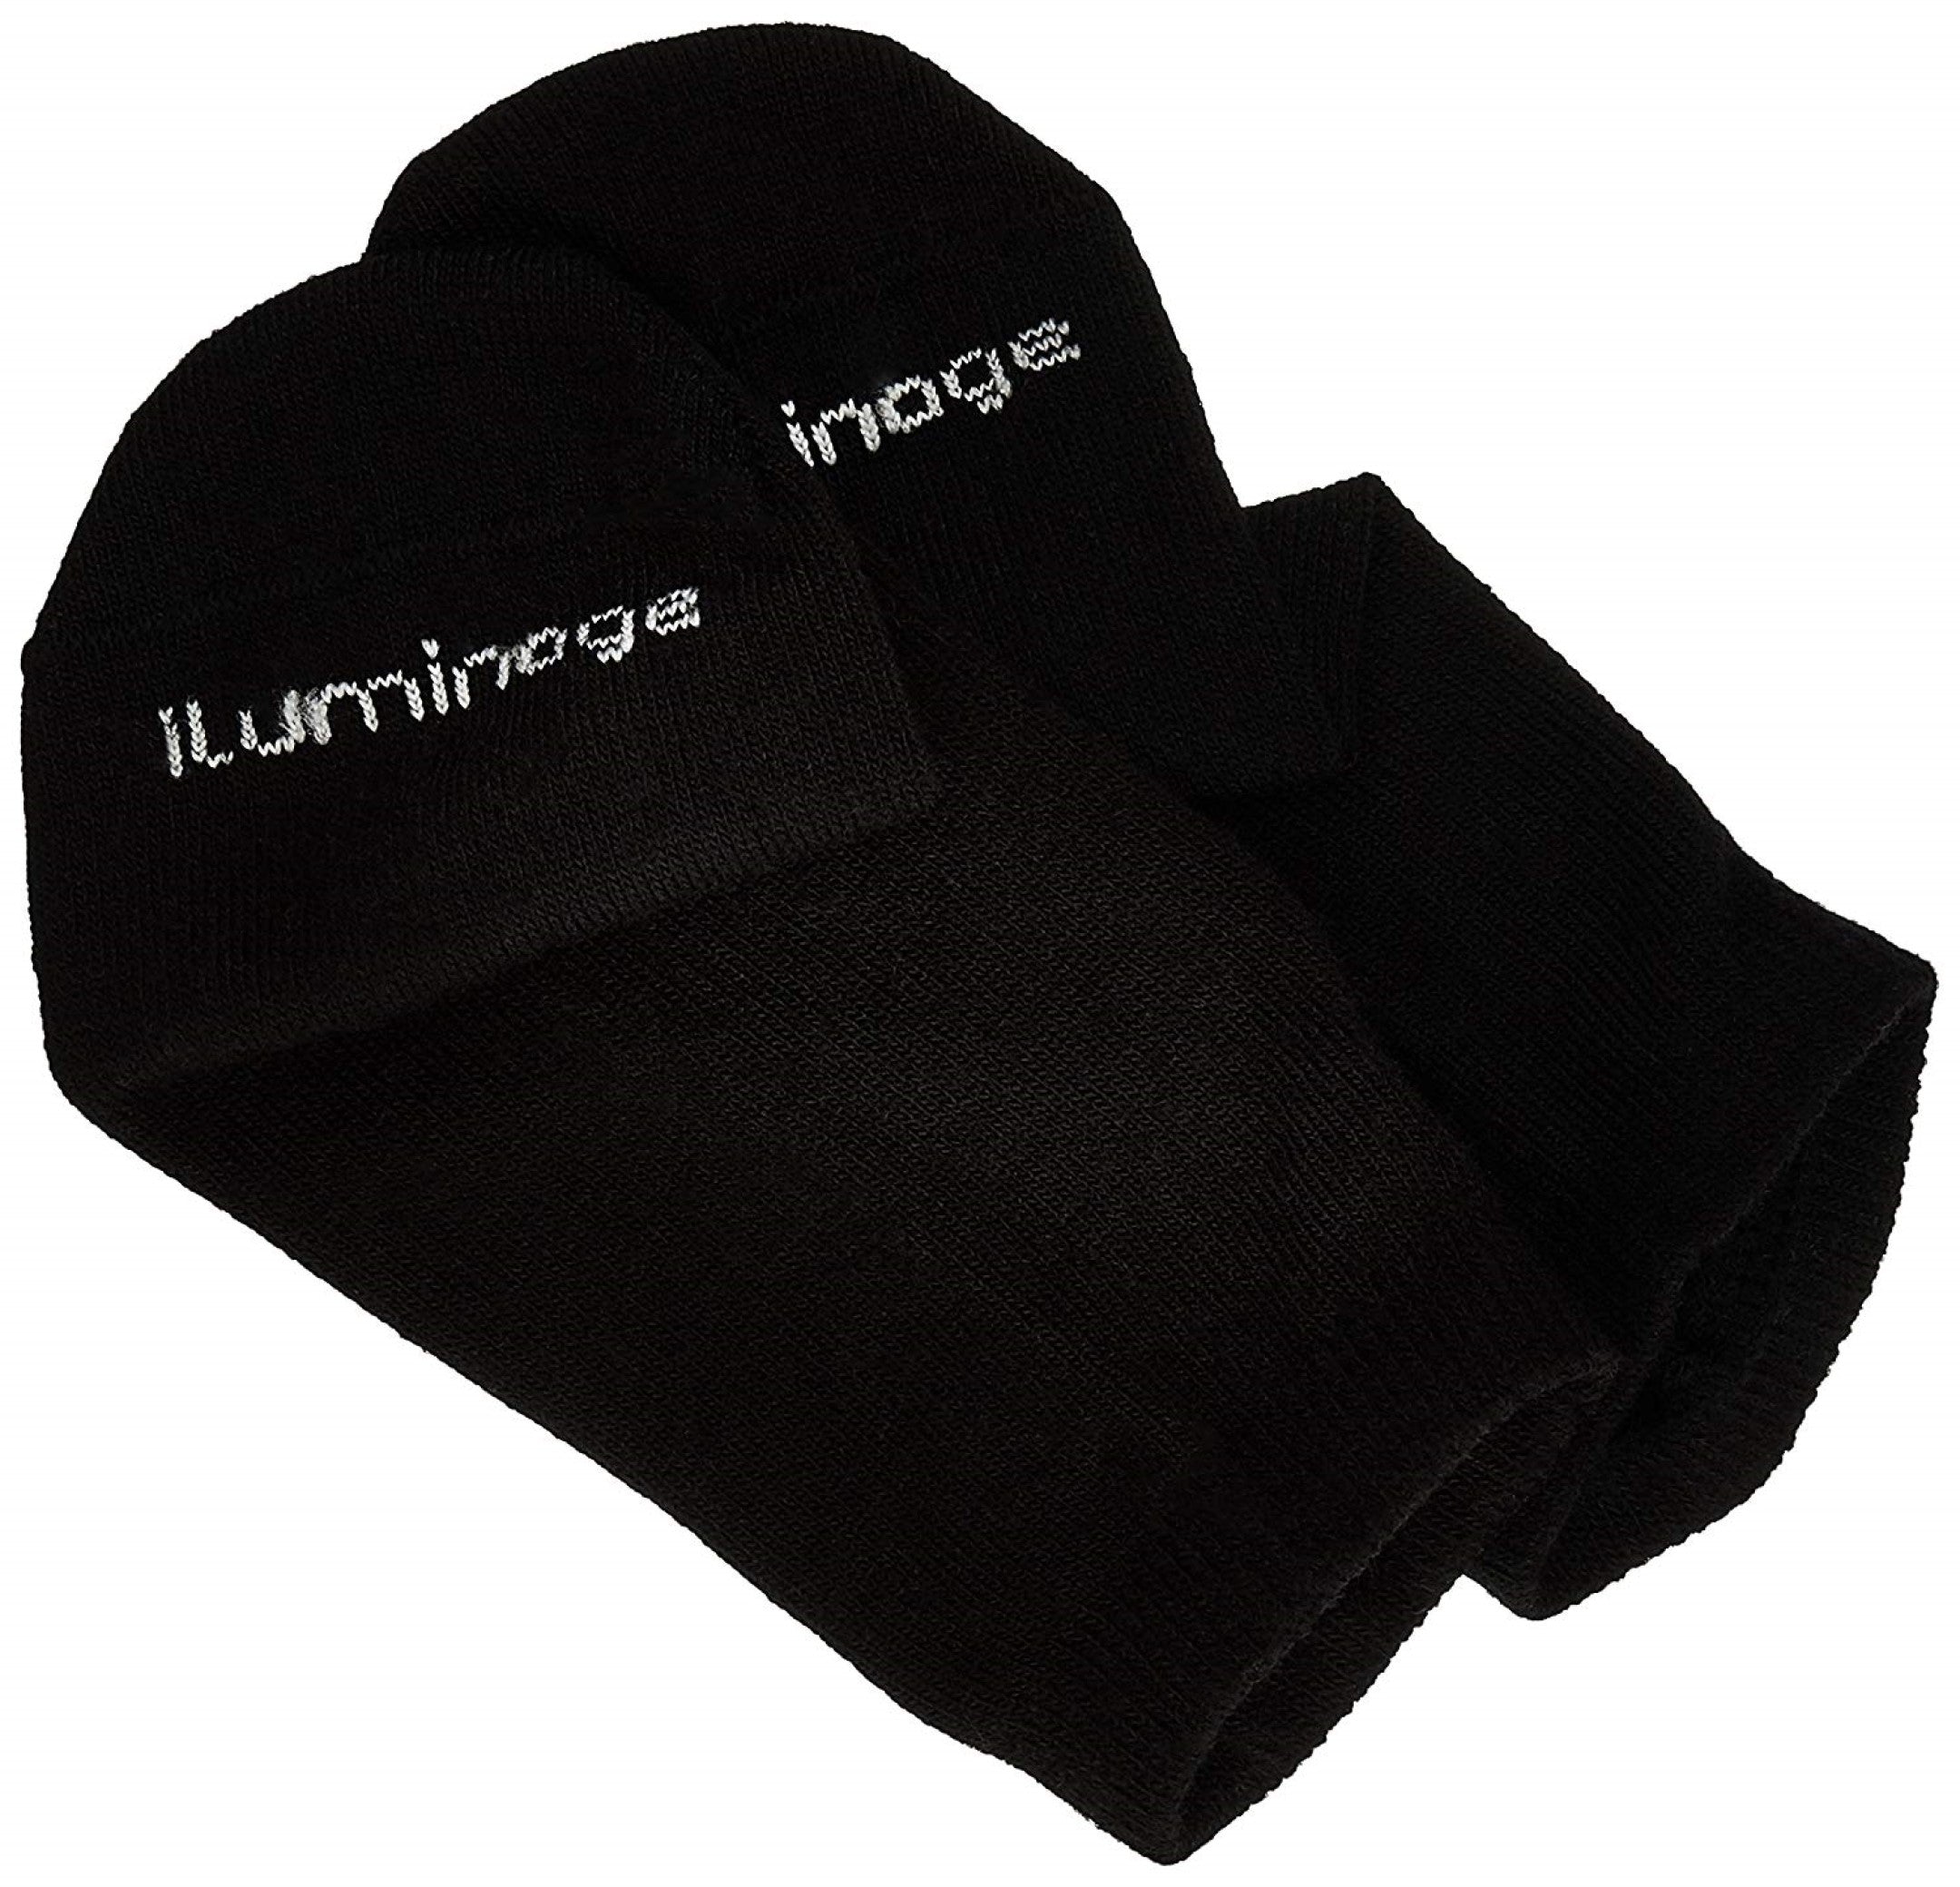 iluminage Skin Rejuvenating Socks with Anti-Aging Copper Technology